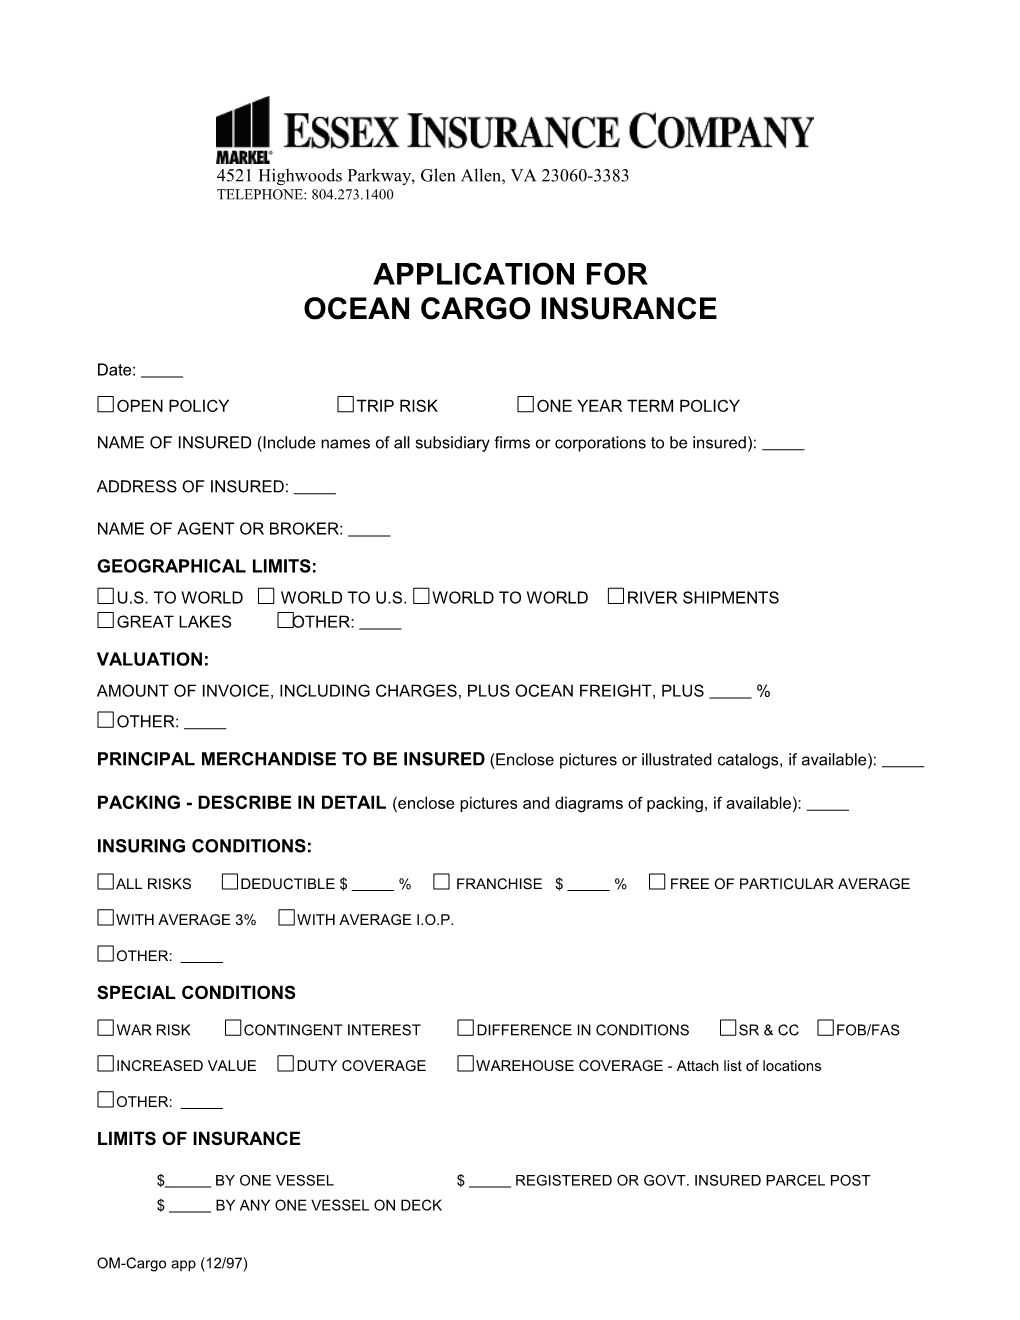 Ocean Cargo Insurance Application